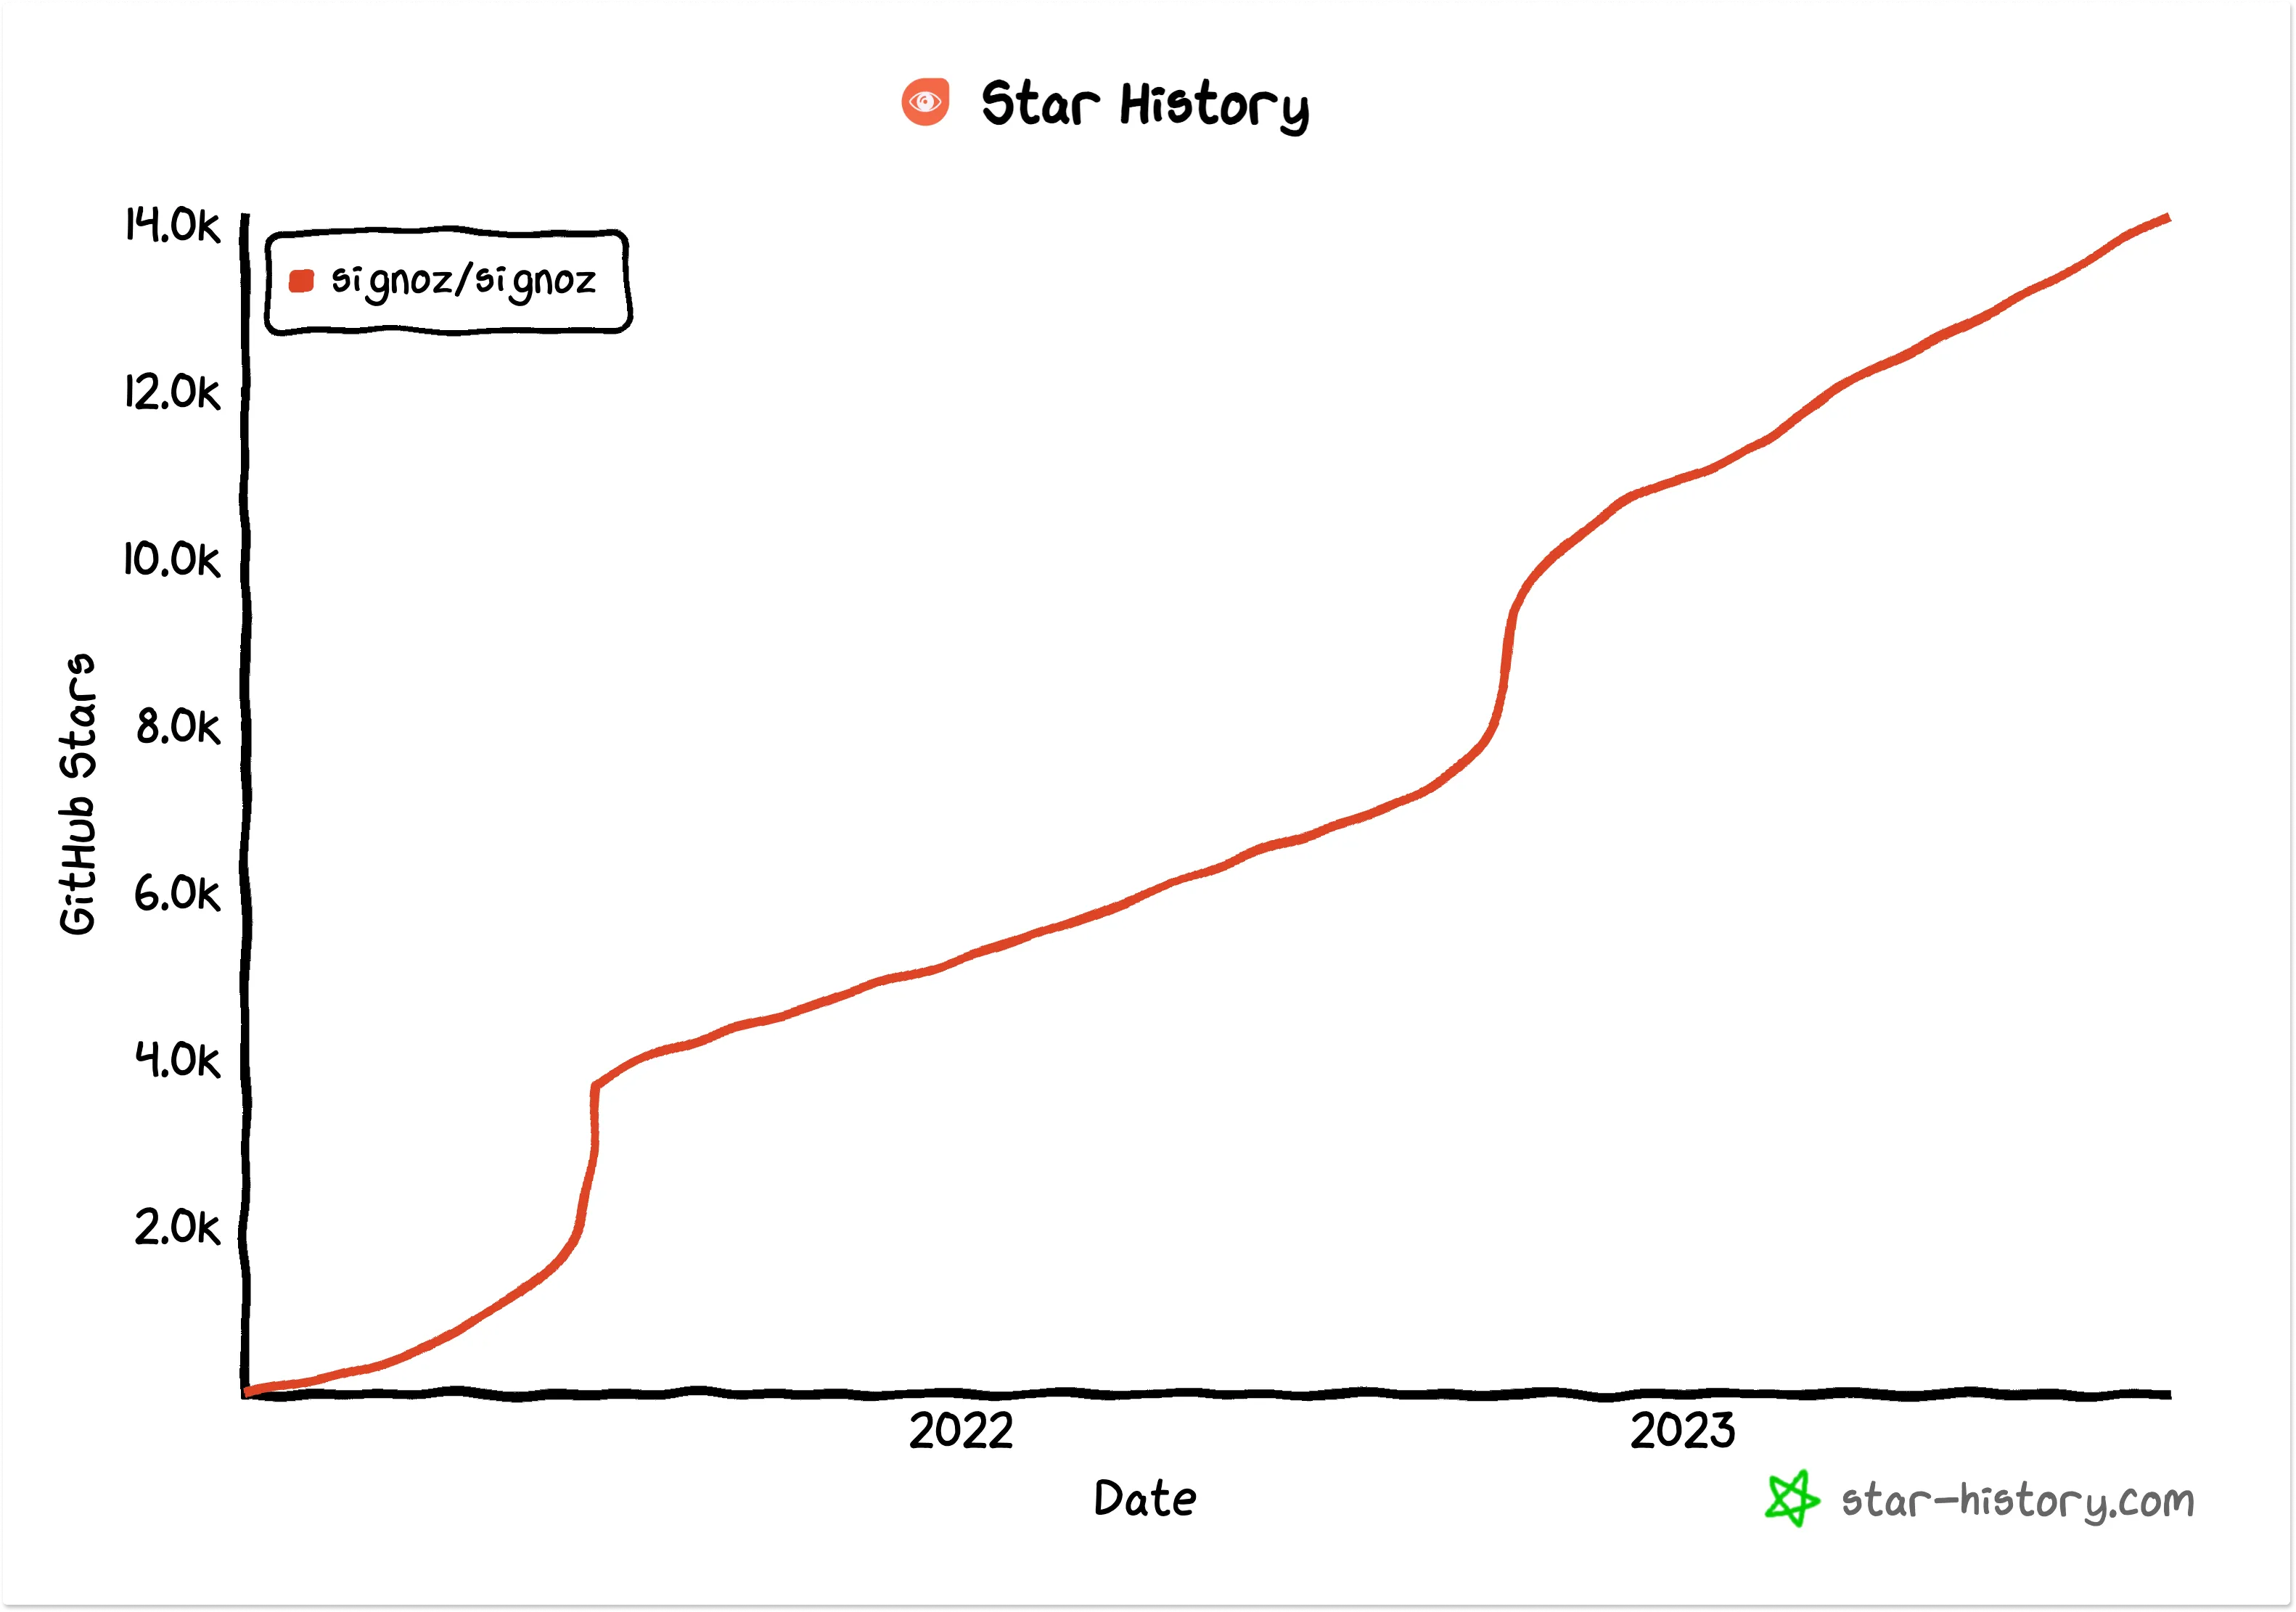 SigNoz reached 14k GitHub stars